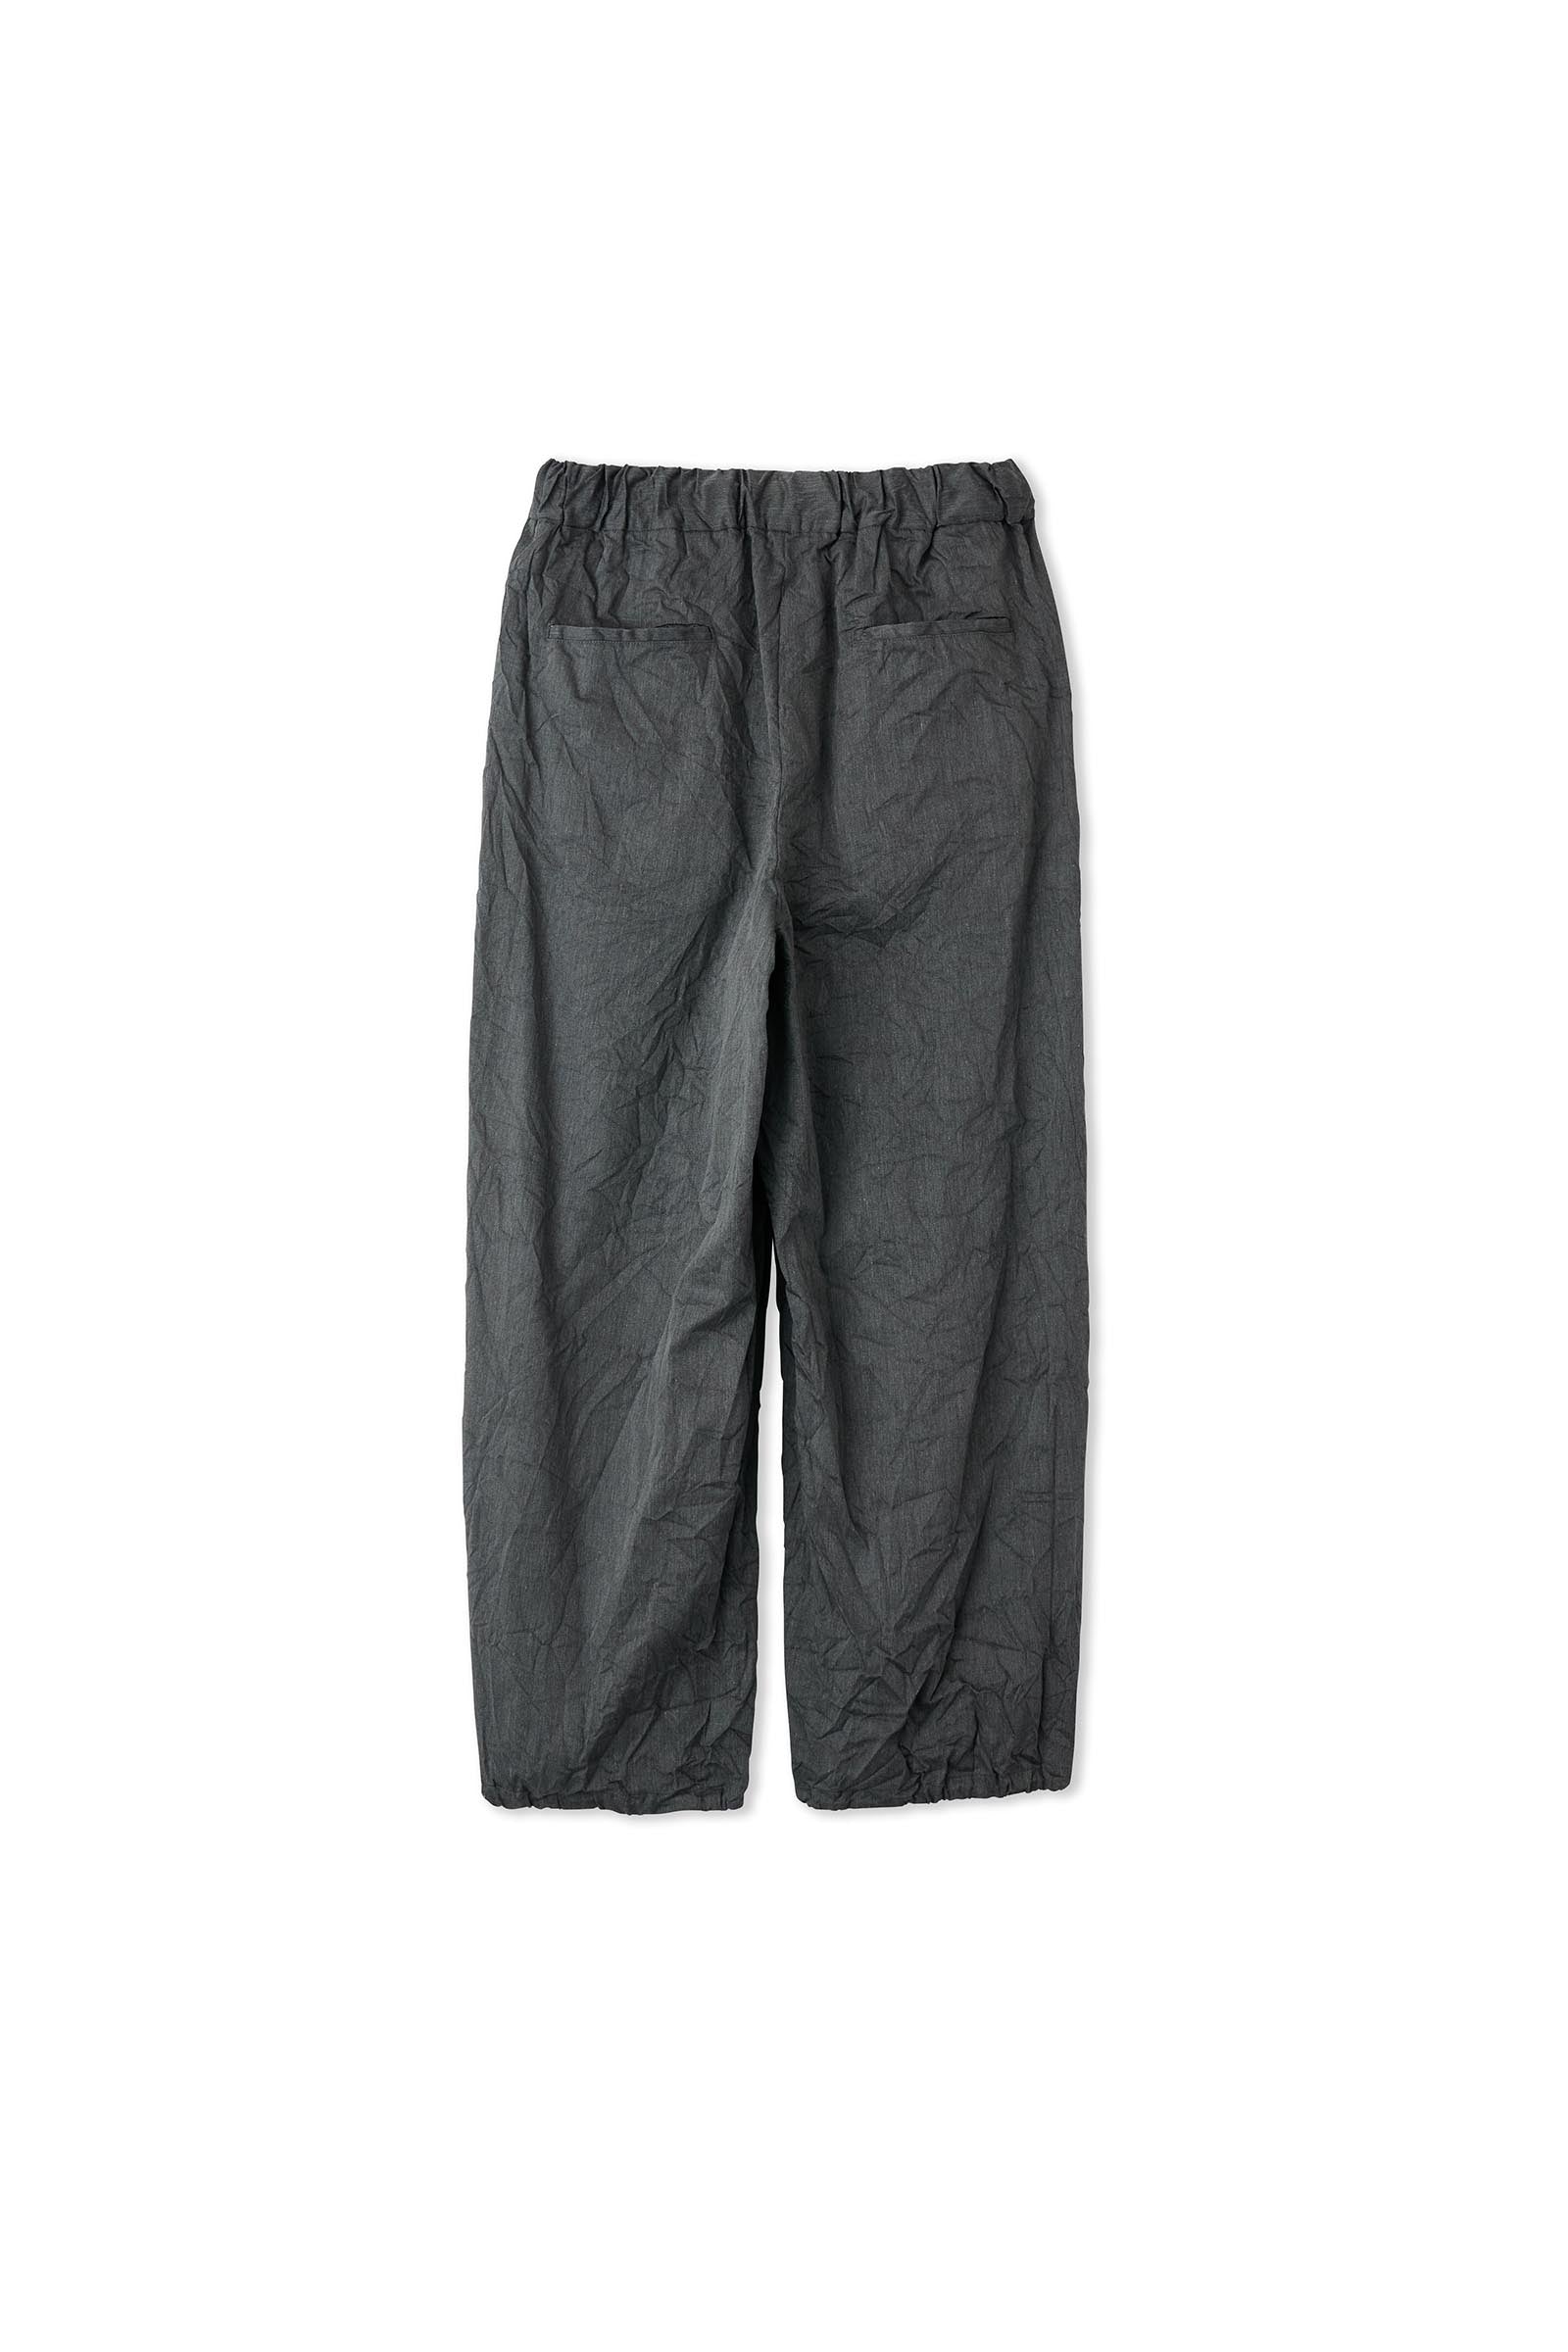 DIGAWEL / Wide lounge pants (crease finish)